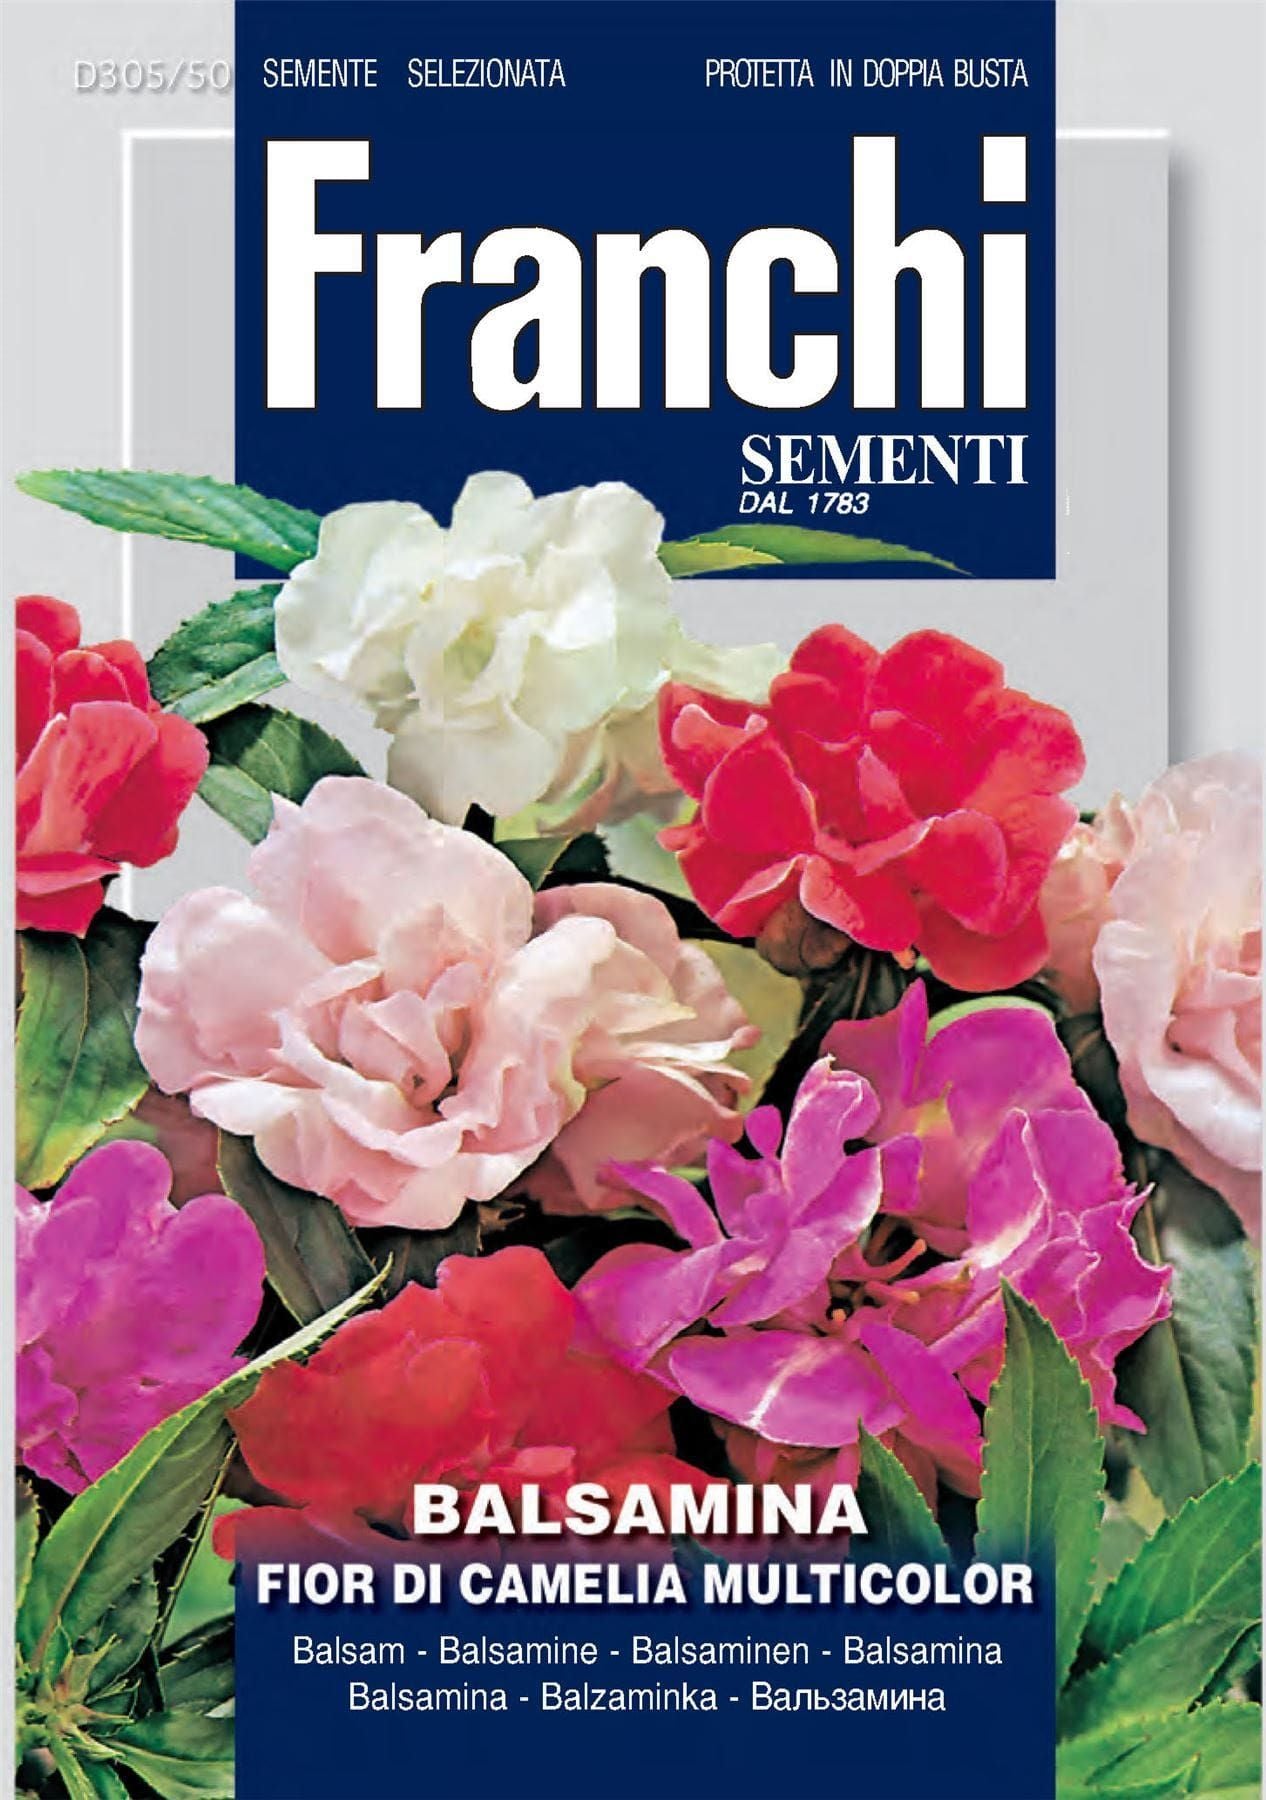 Franchi Seeds of Italy - Flower - FDBF_ 305-50 - Balsamina Fior di Camelia Multicolour - Seeds